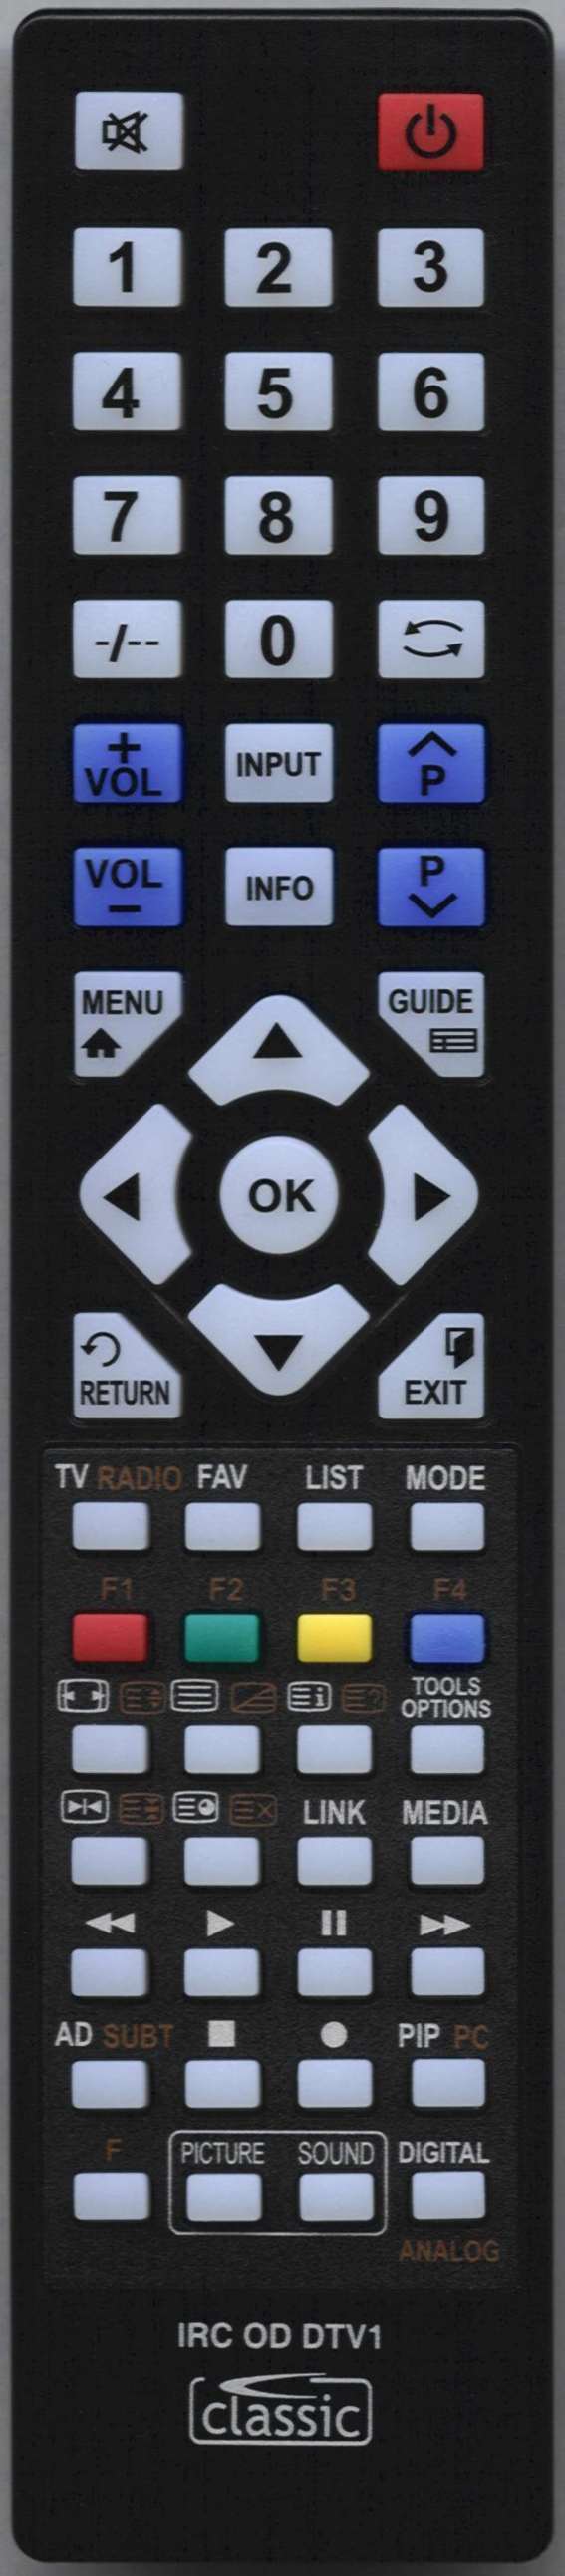 AKURA AB280WS Remote Control